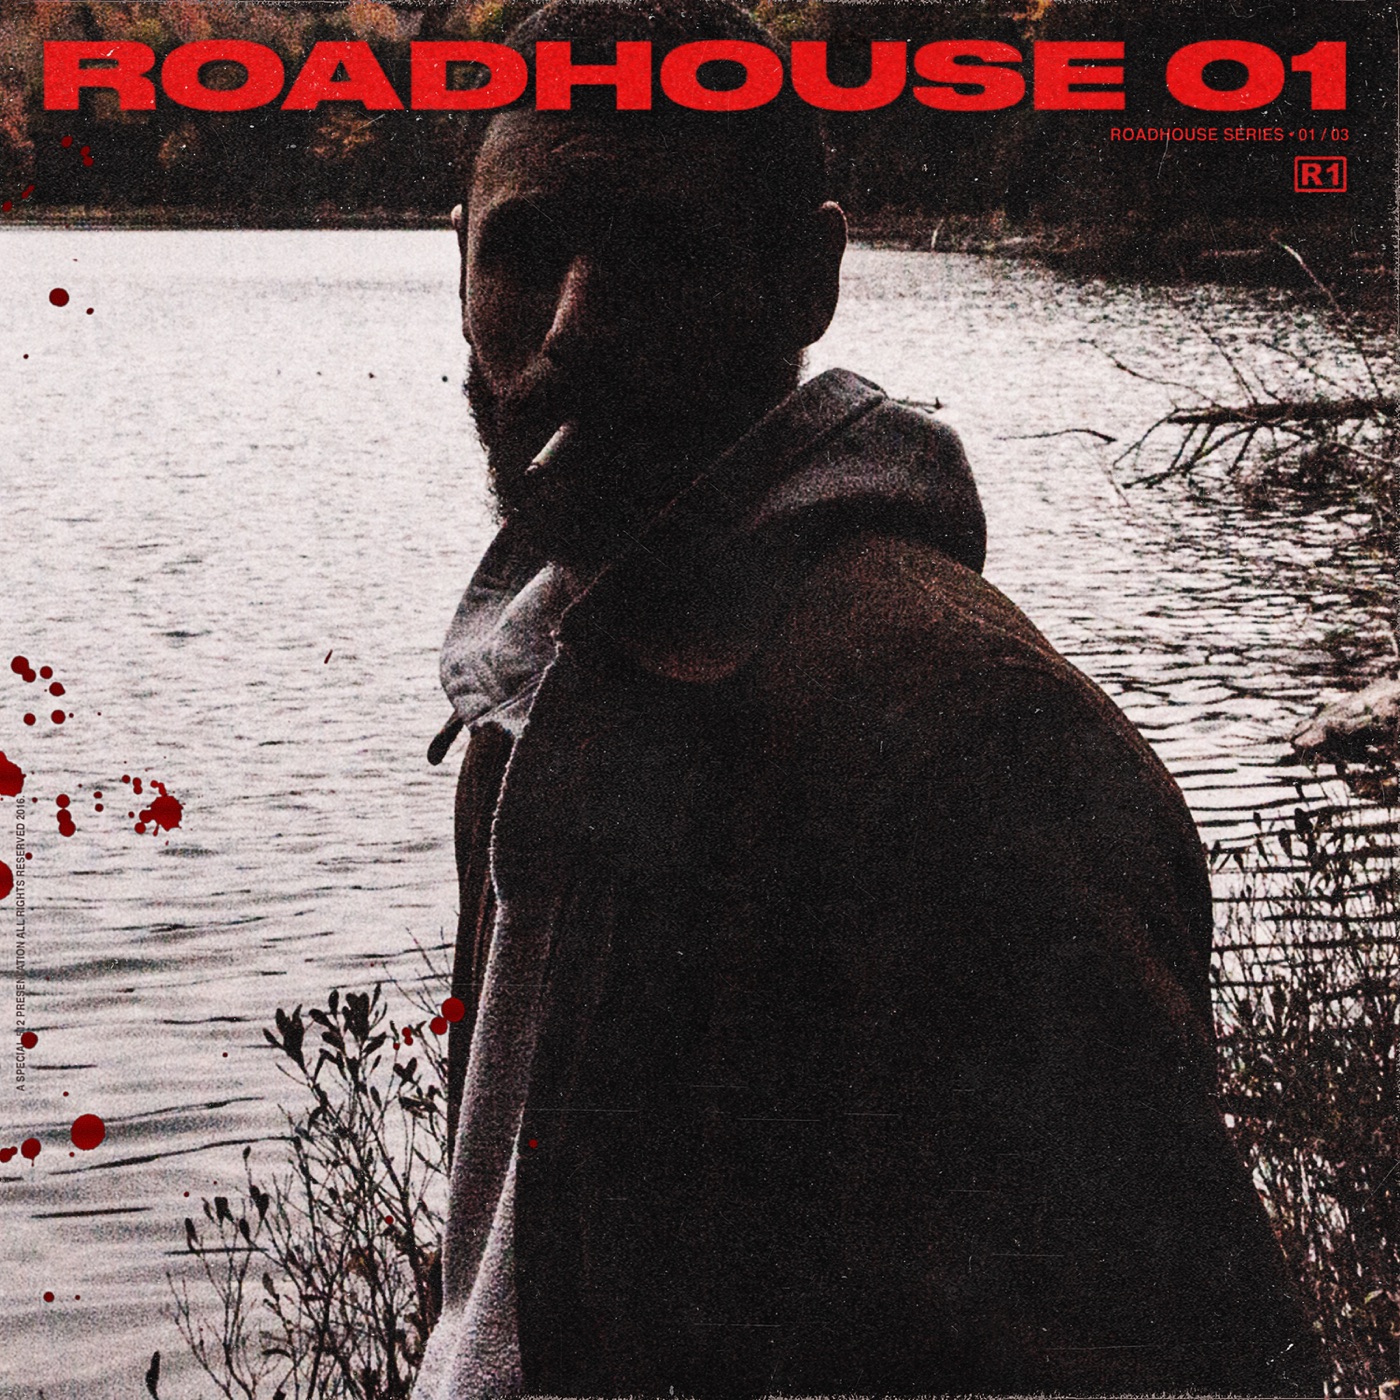 Roadhouse 01 by Allan Rayman, Roadhouse 01